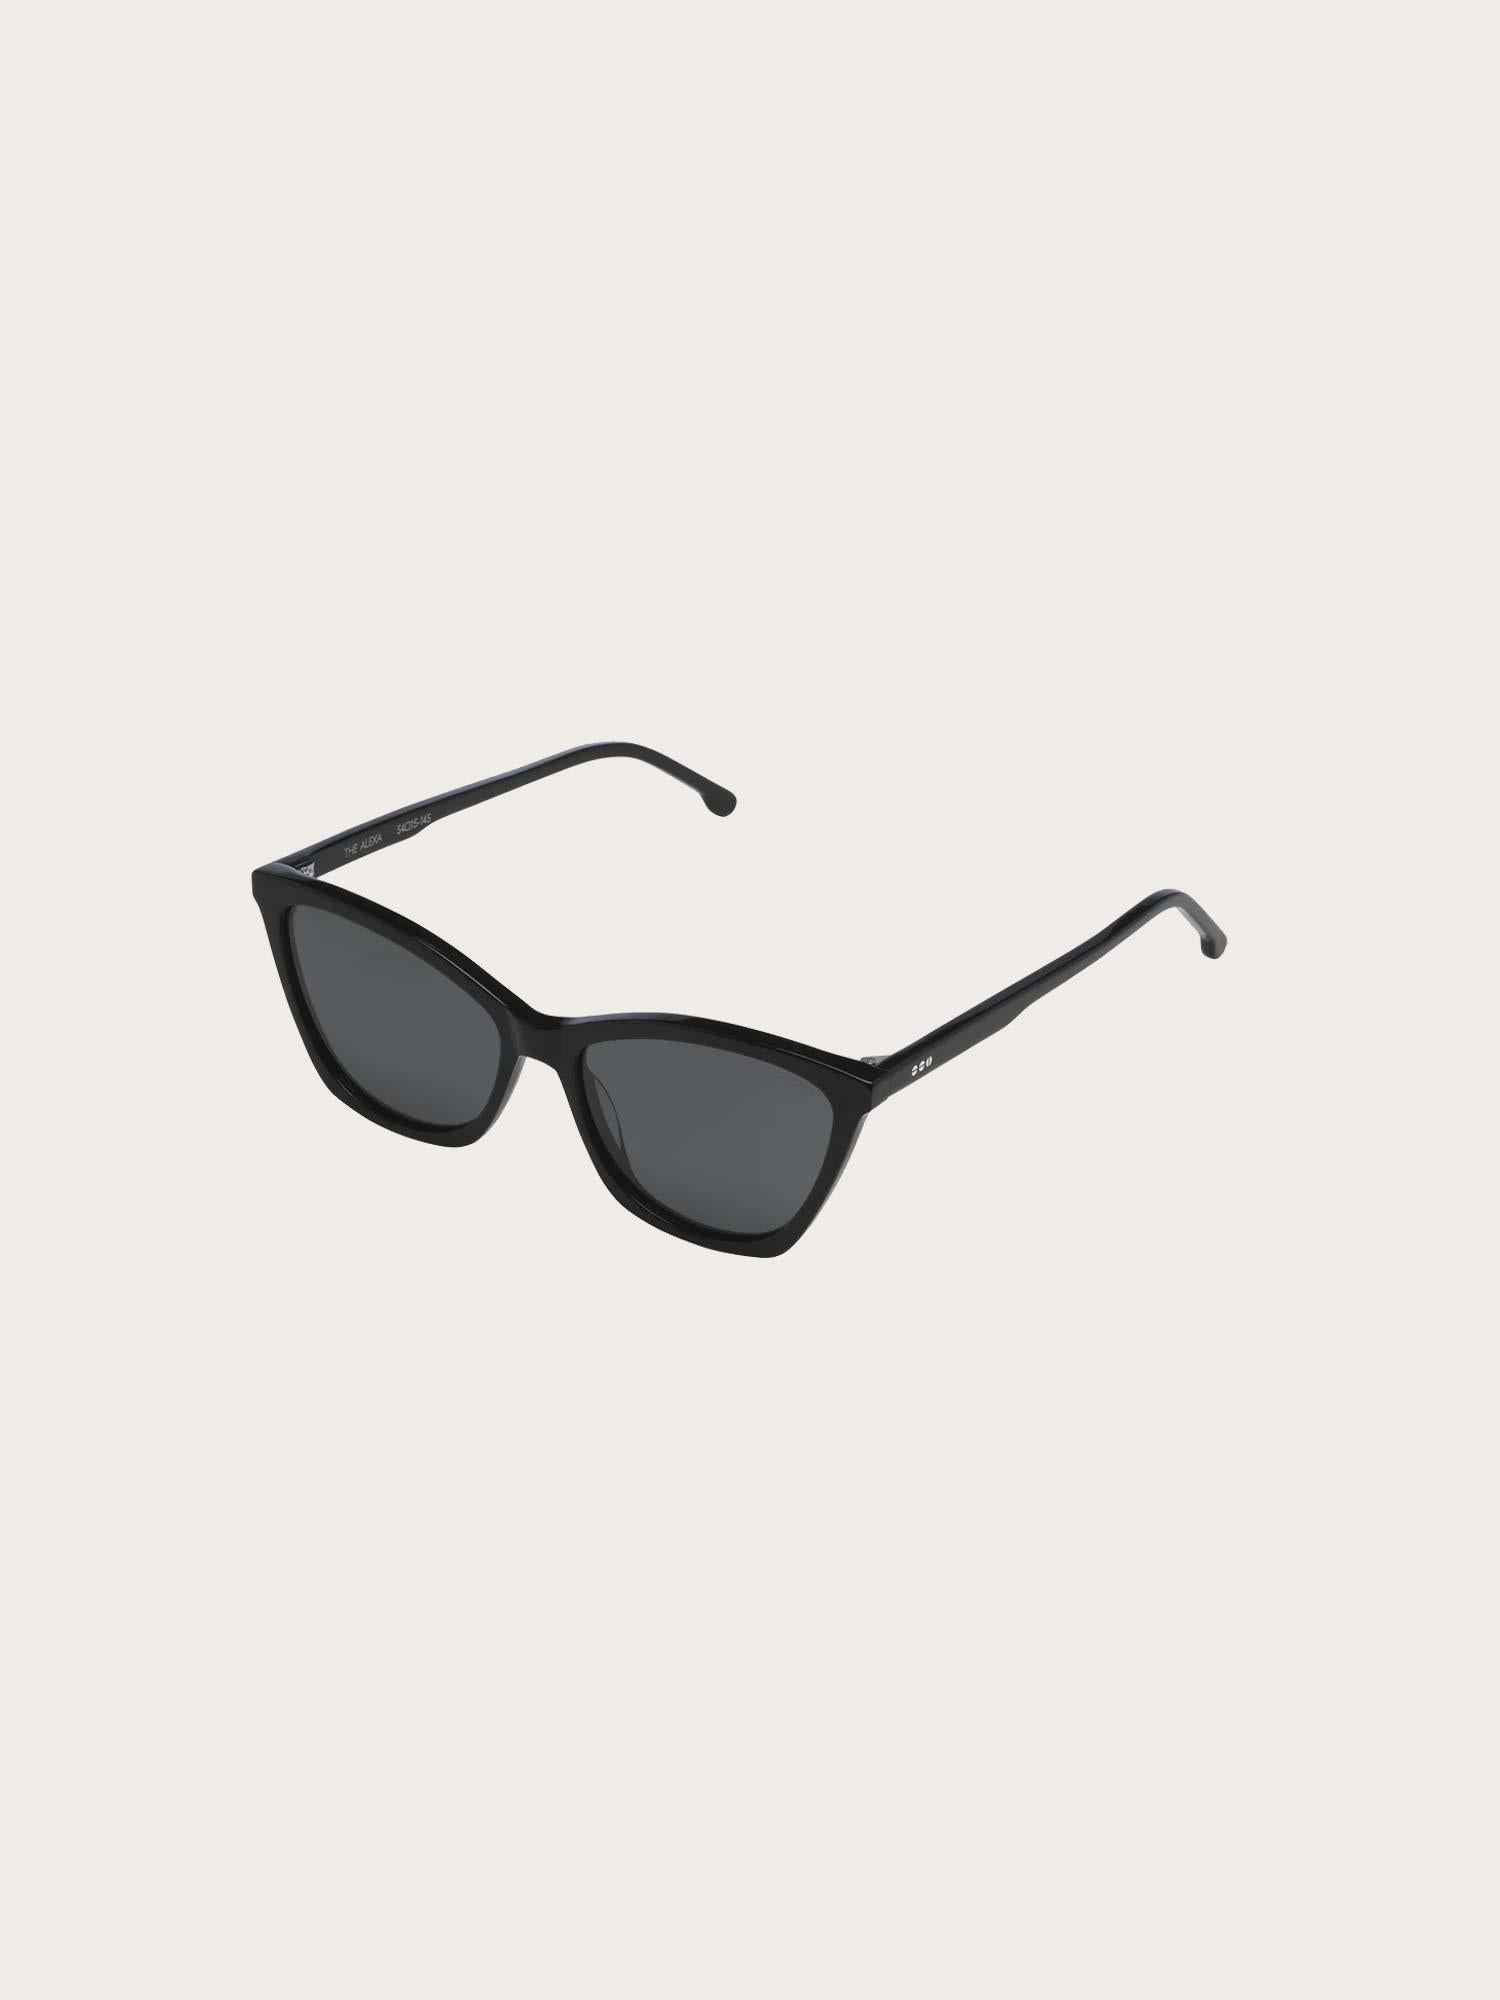 Alexa Sunglasses - Black